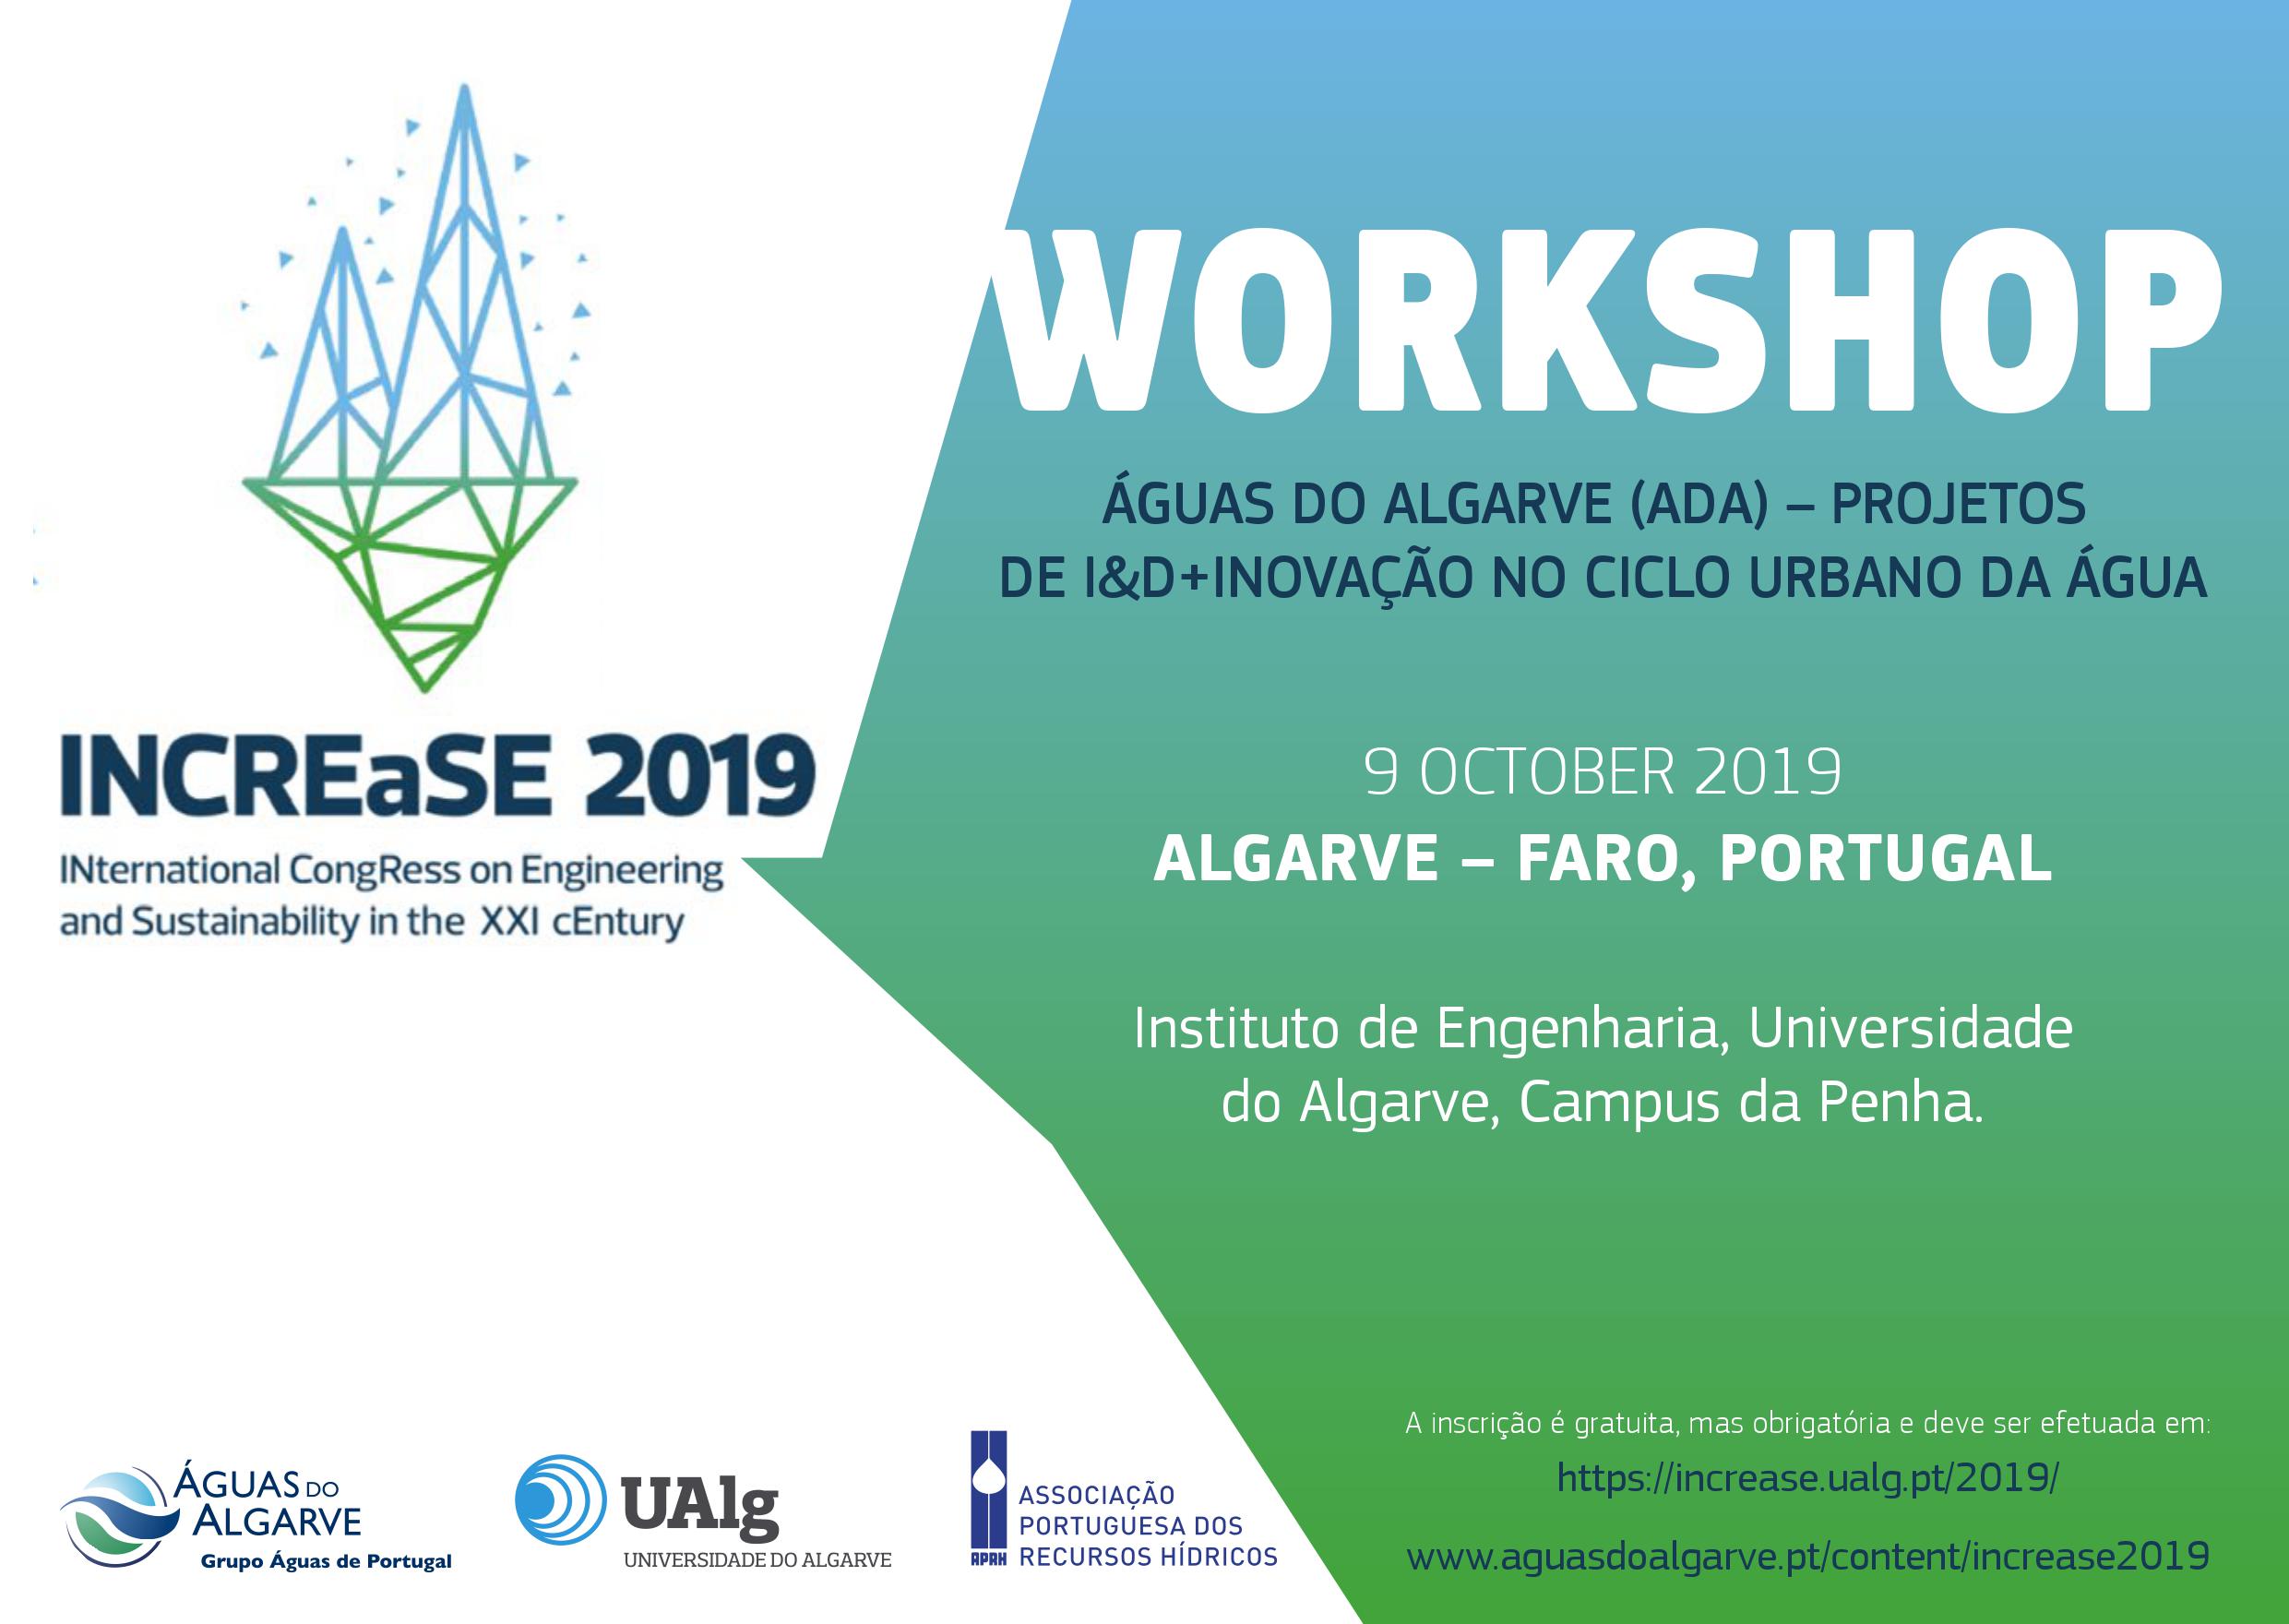 Congresso Internacional de Engenharia e Sustentabilidade no Séc. XXI - INCREASE 2019